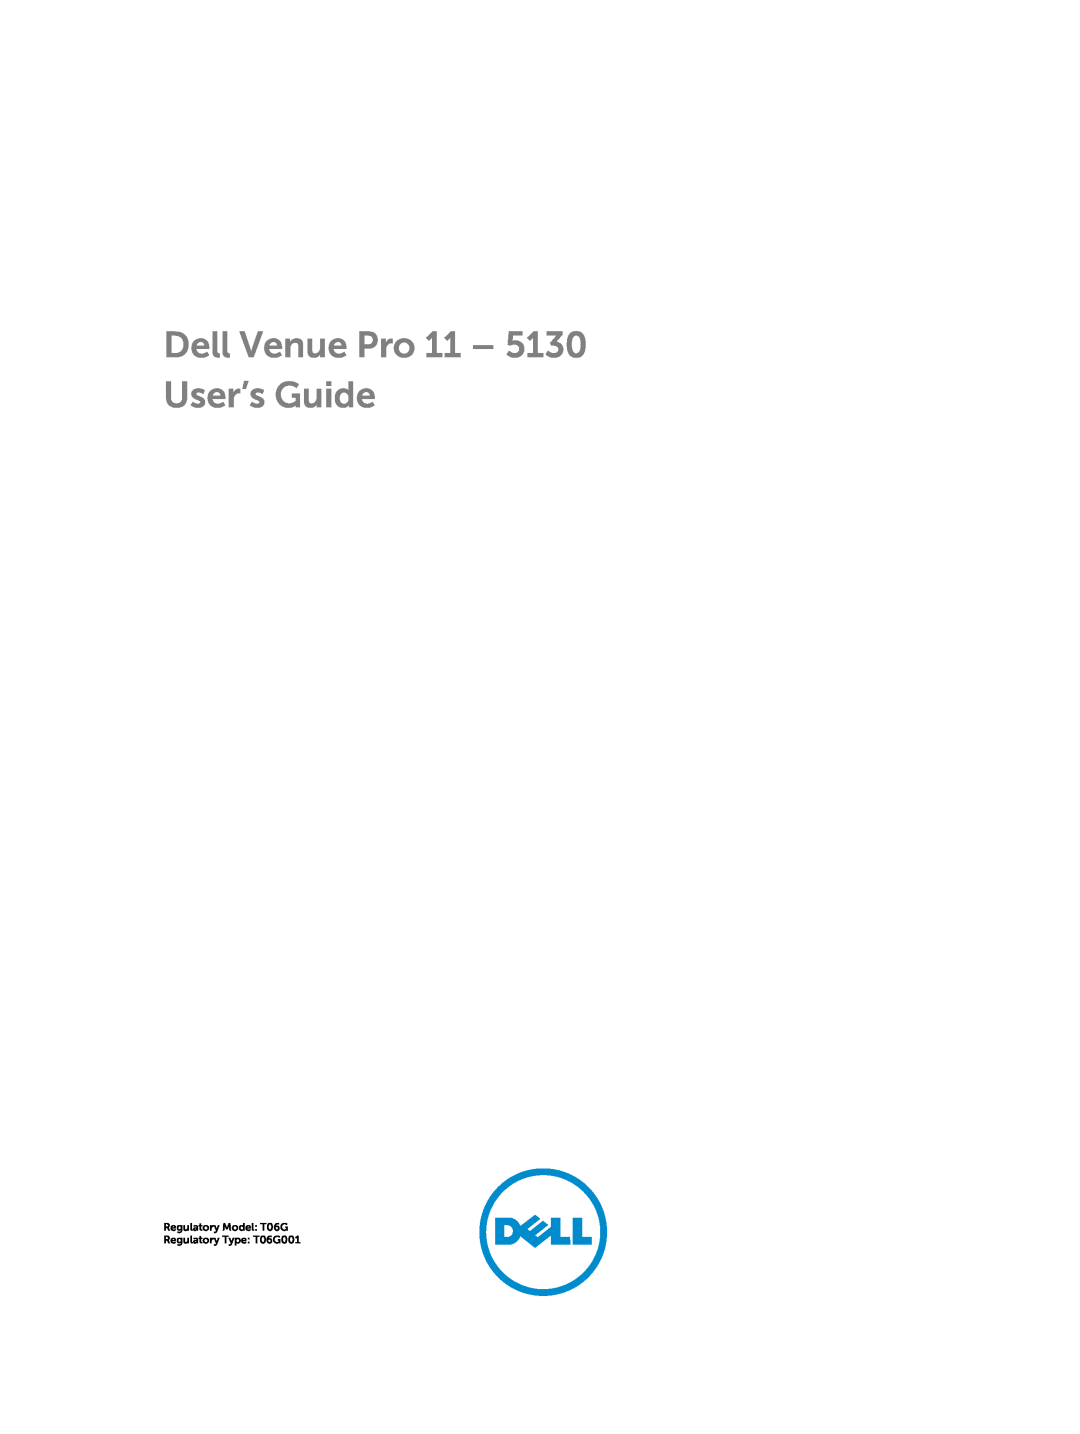 Dell manual Dell Venue Pro 11 User’s Guide, Regulatory Model T06G Regulatory Type T06G001 